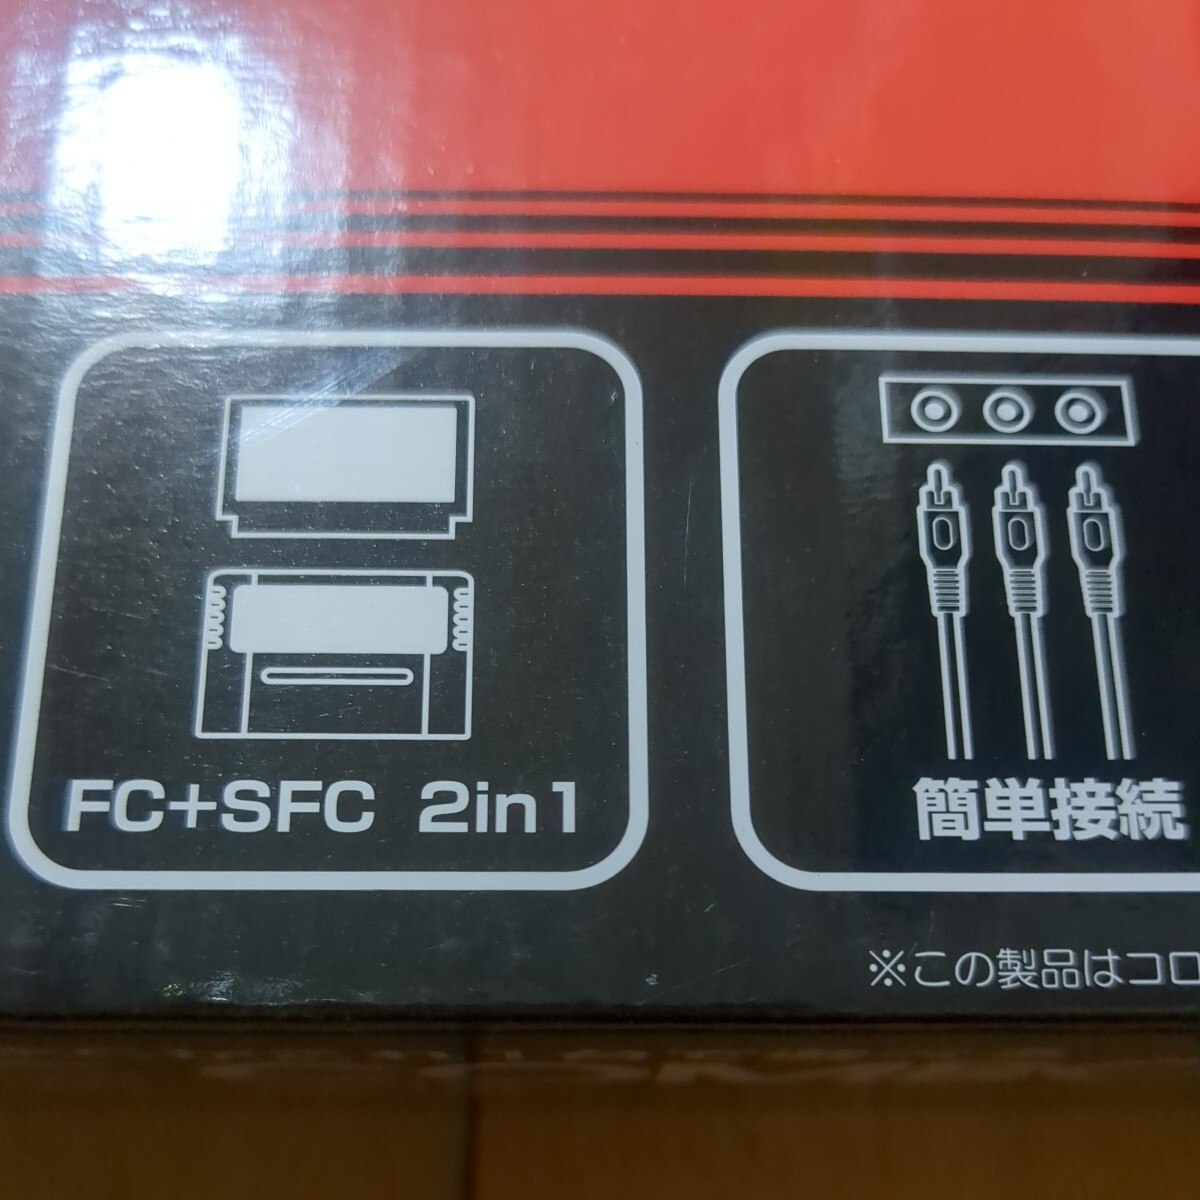 FC COMBO *efsi- combo FC SFC compatible cologne bus Circle Famicom Super Famicom 